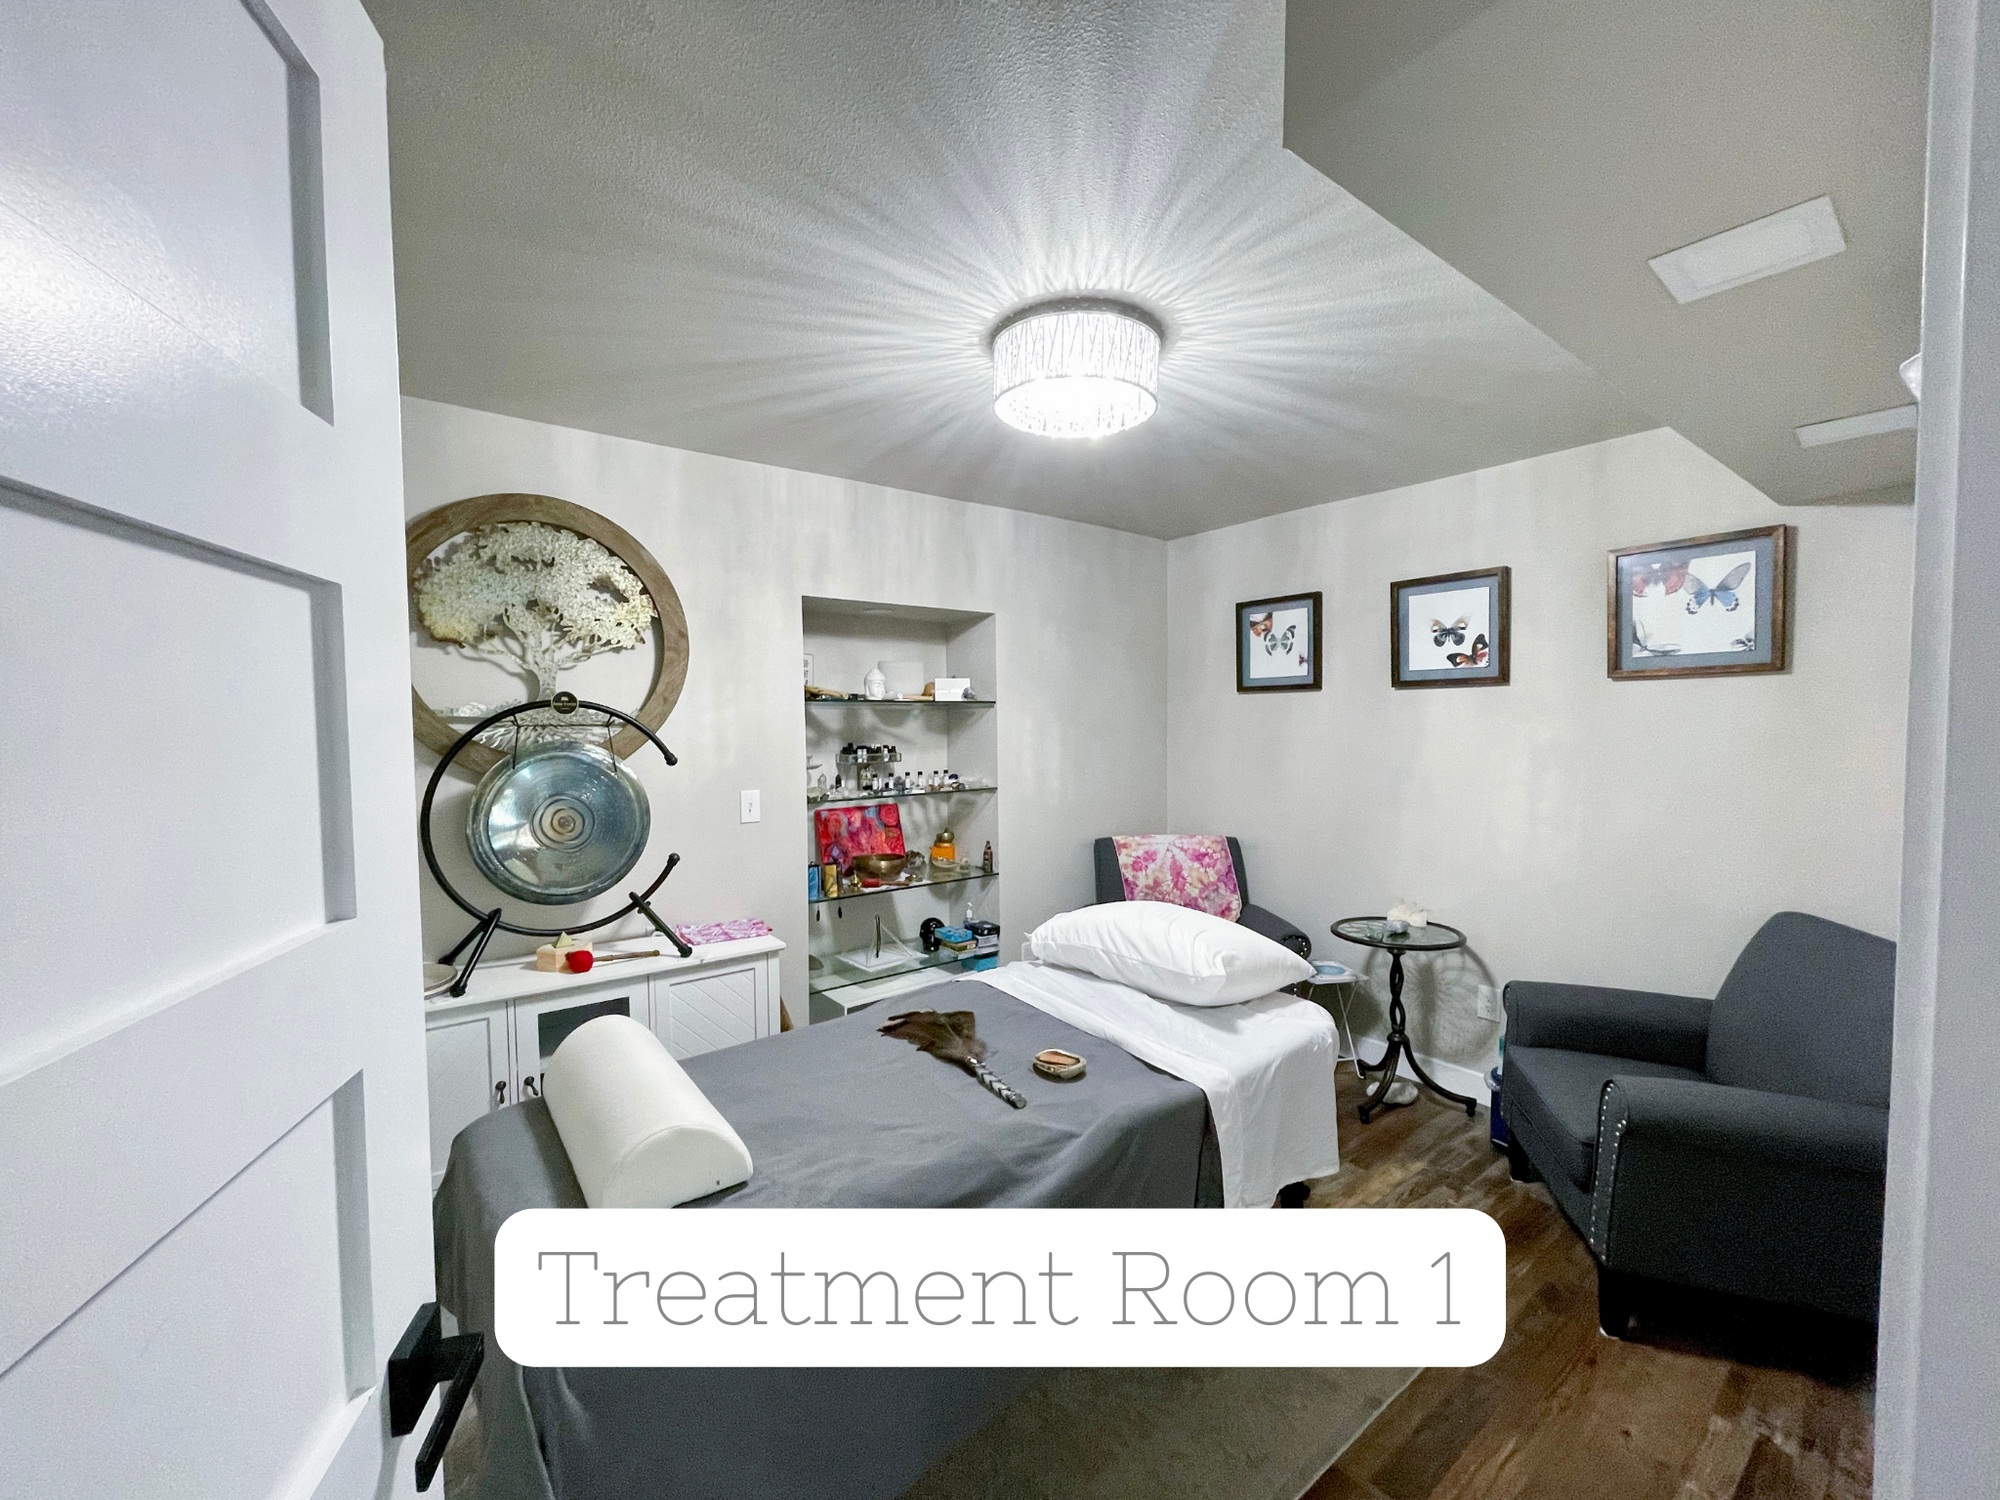 Weekday Treatment Room Rental